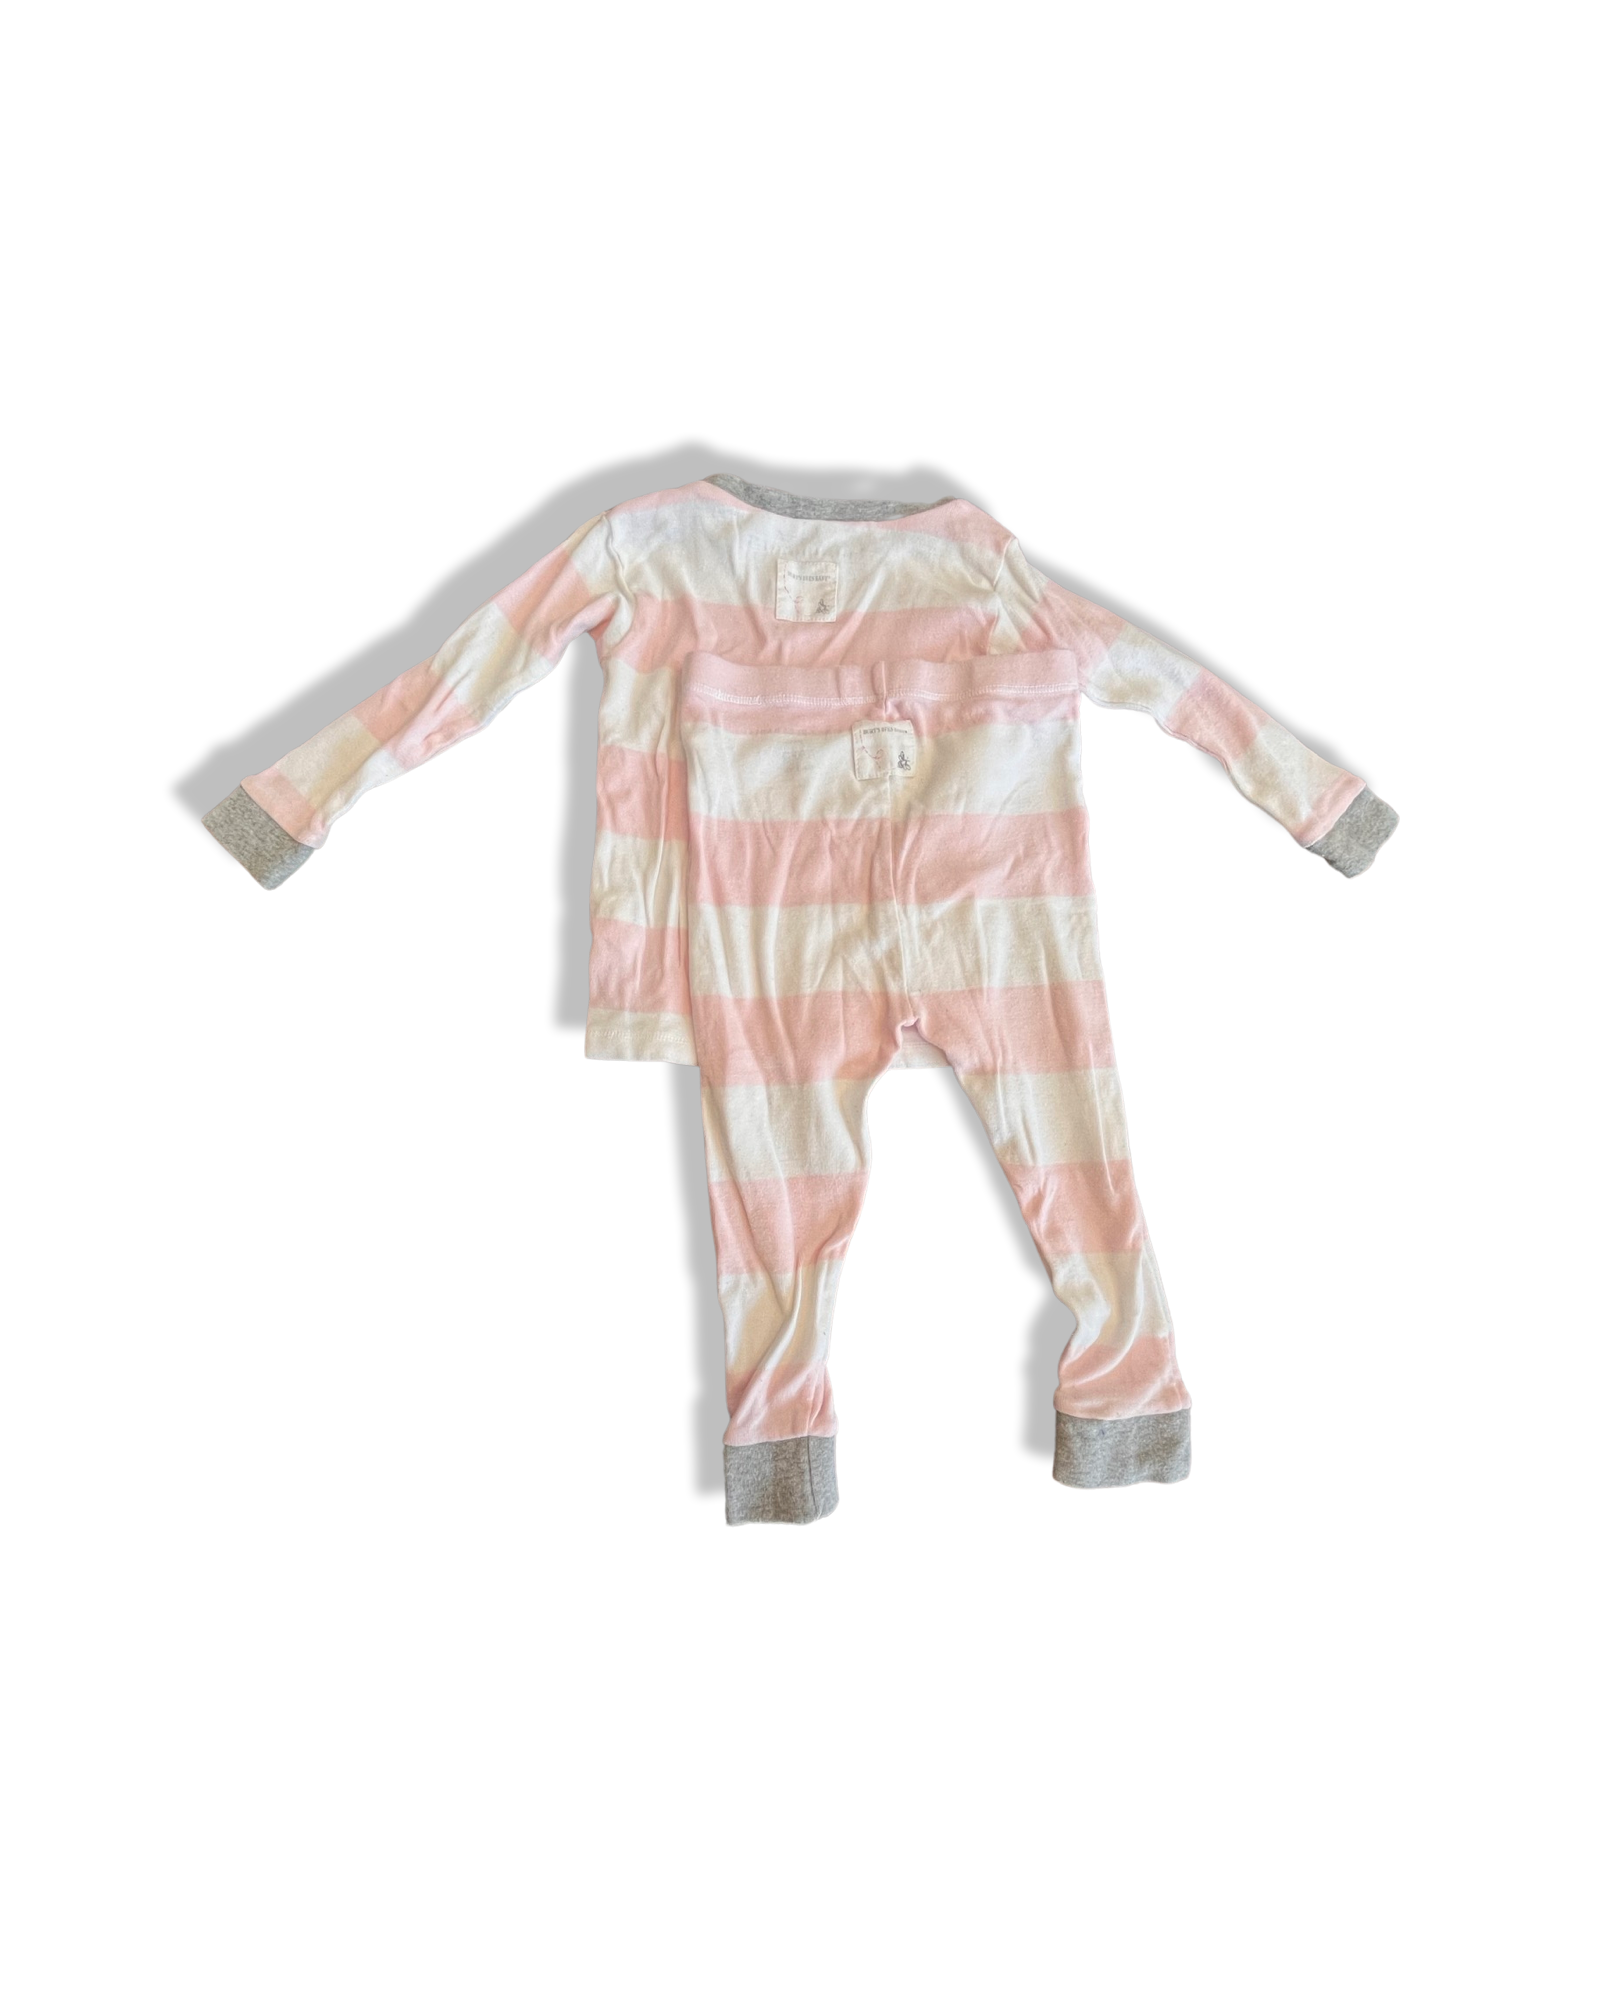 Burt's Bees Pink and White Striped Pajama Set (18M)